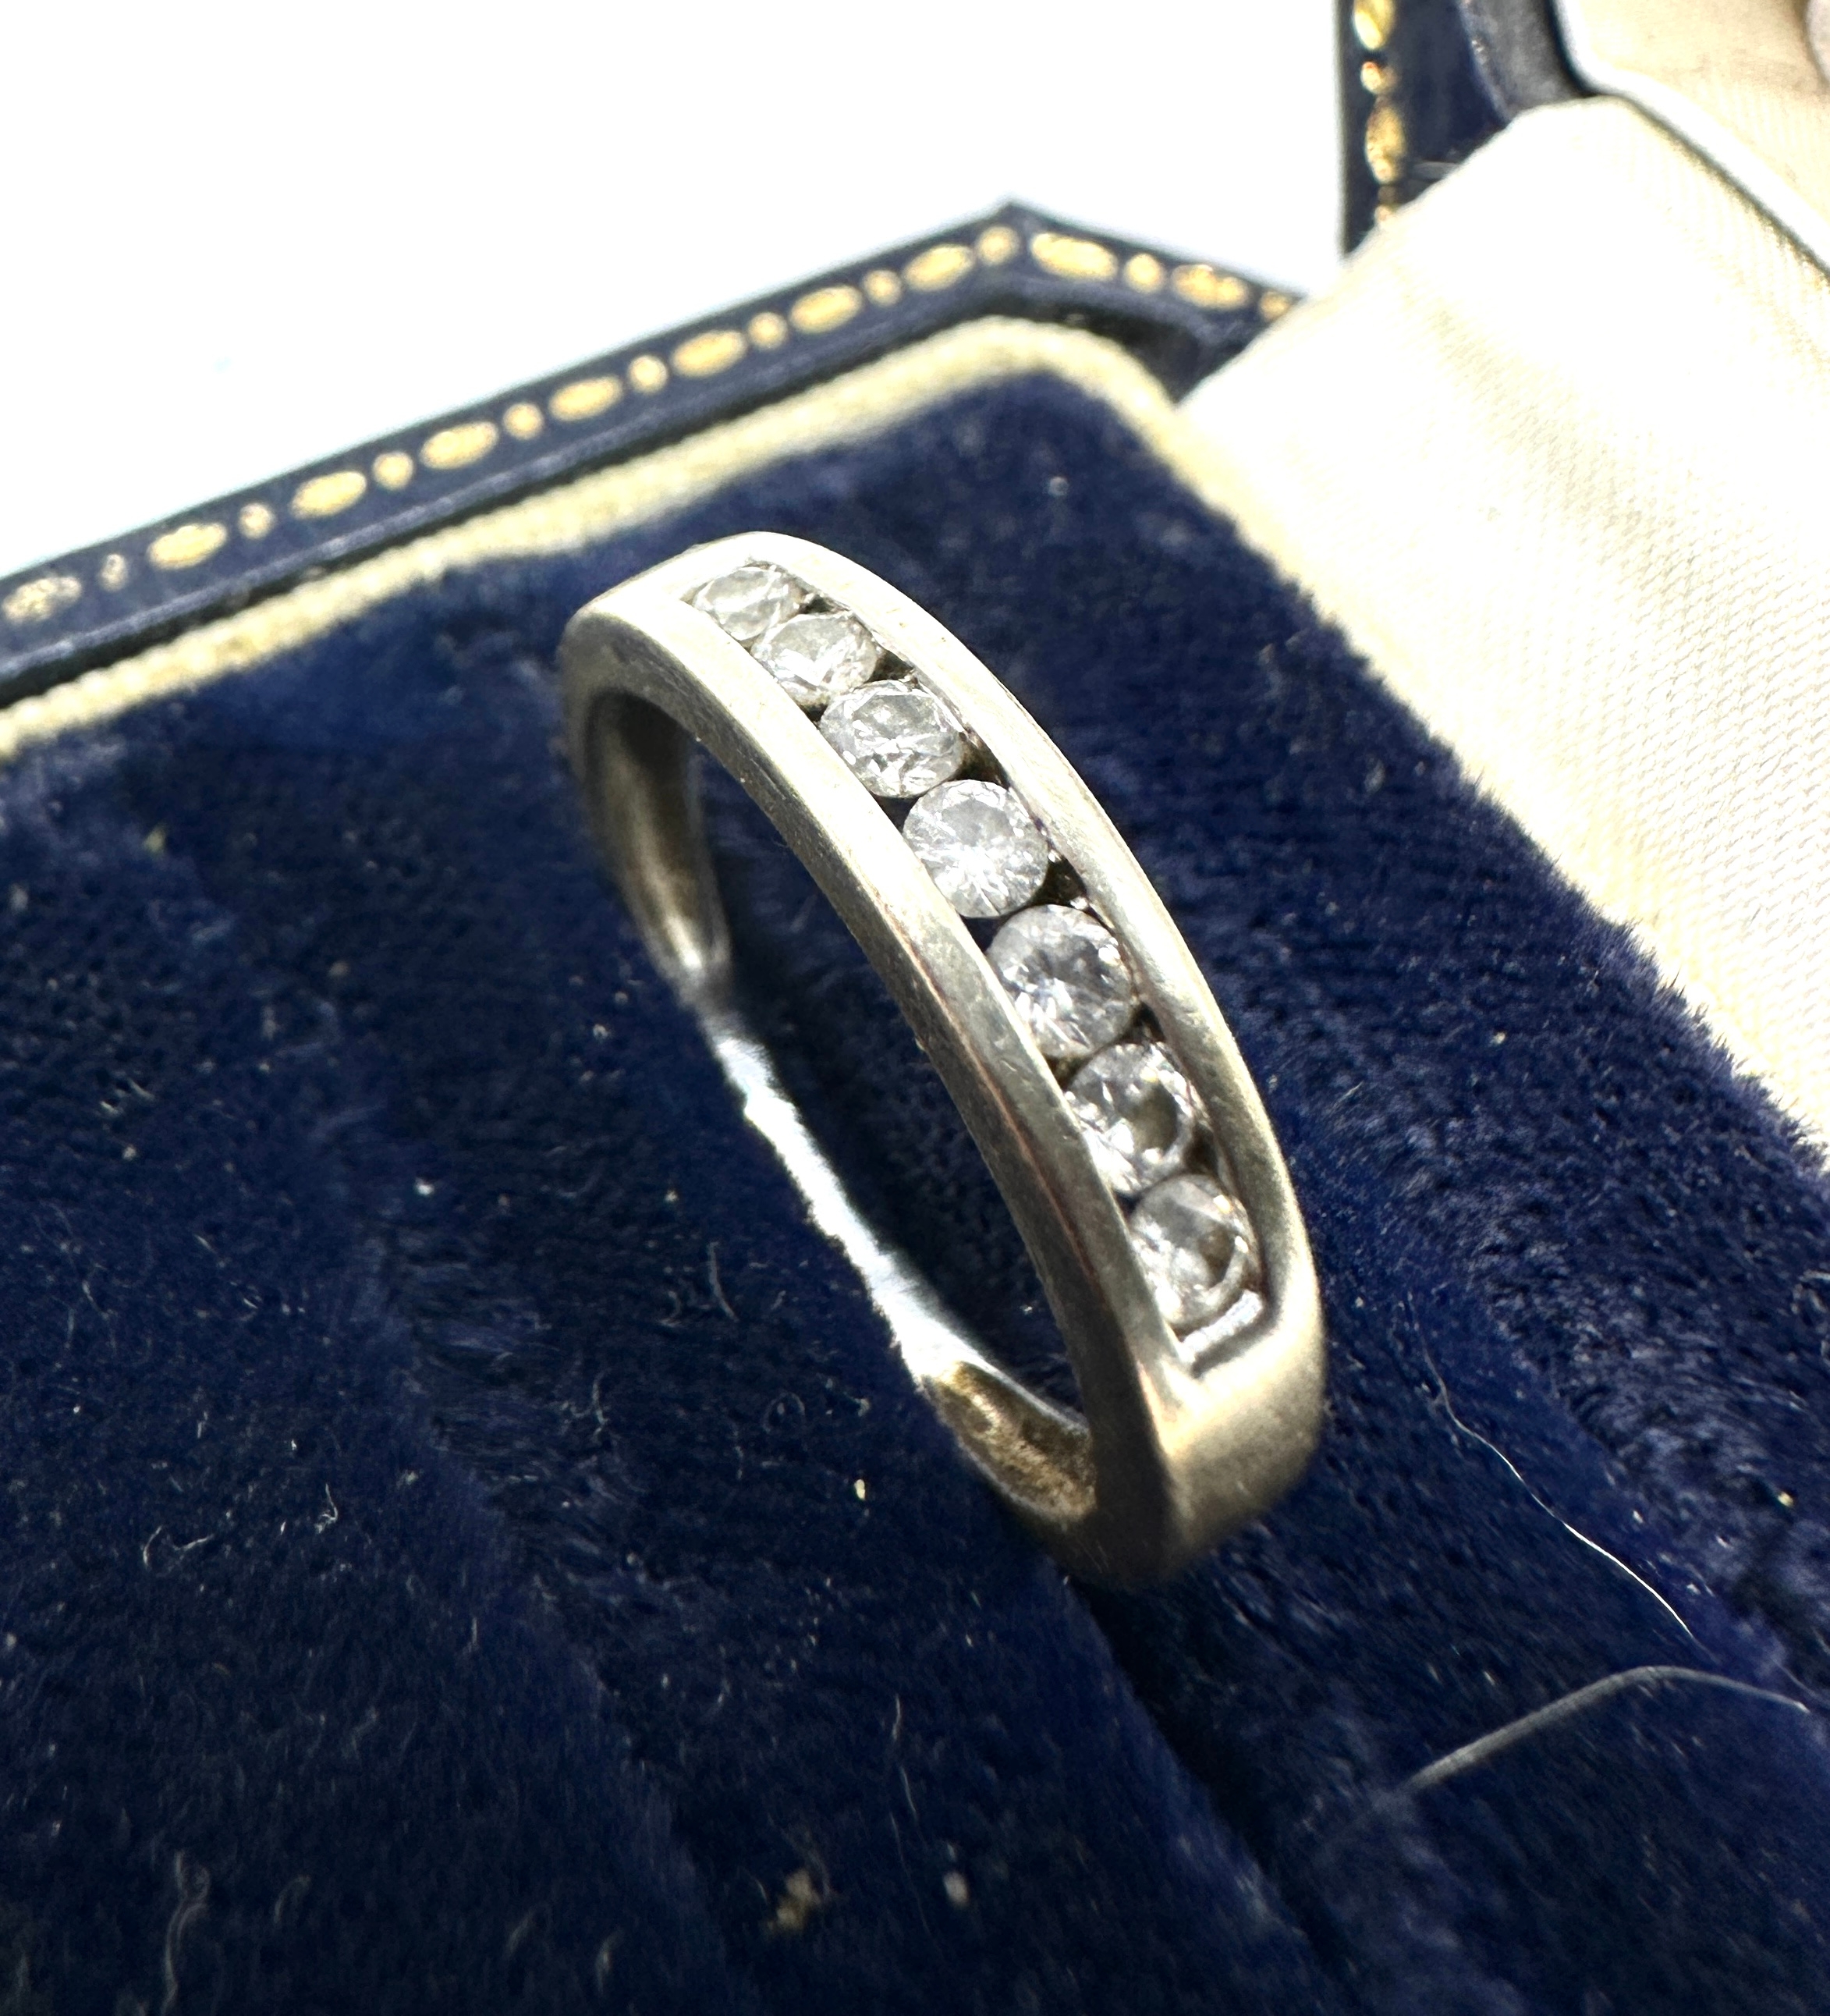 9ct white gold diamond ring weight 2.1g - Image 3 of 4